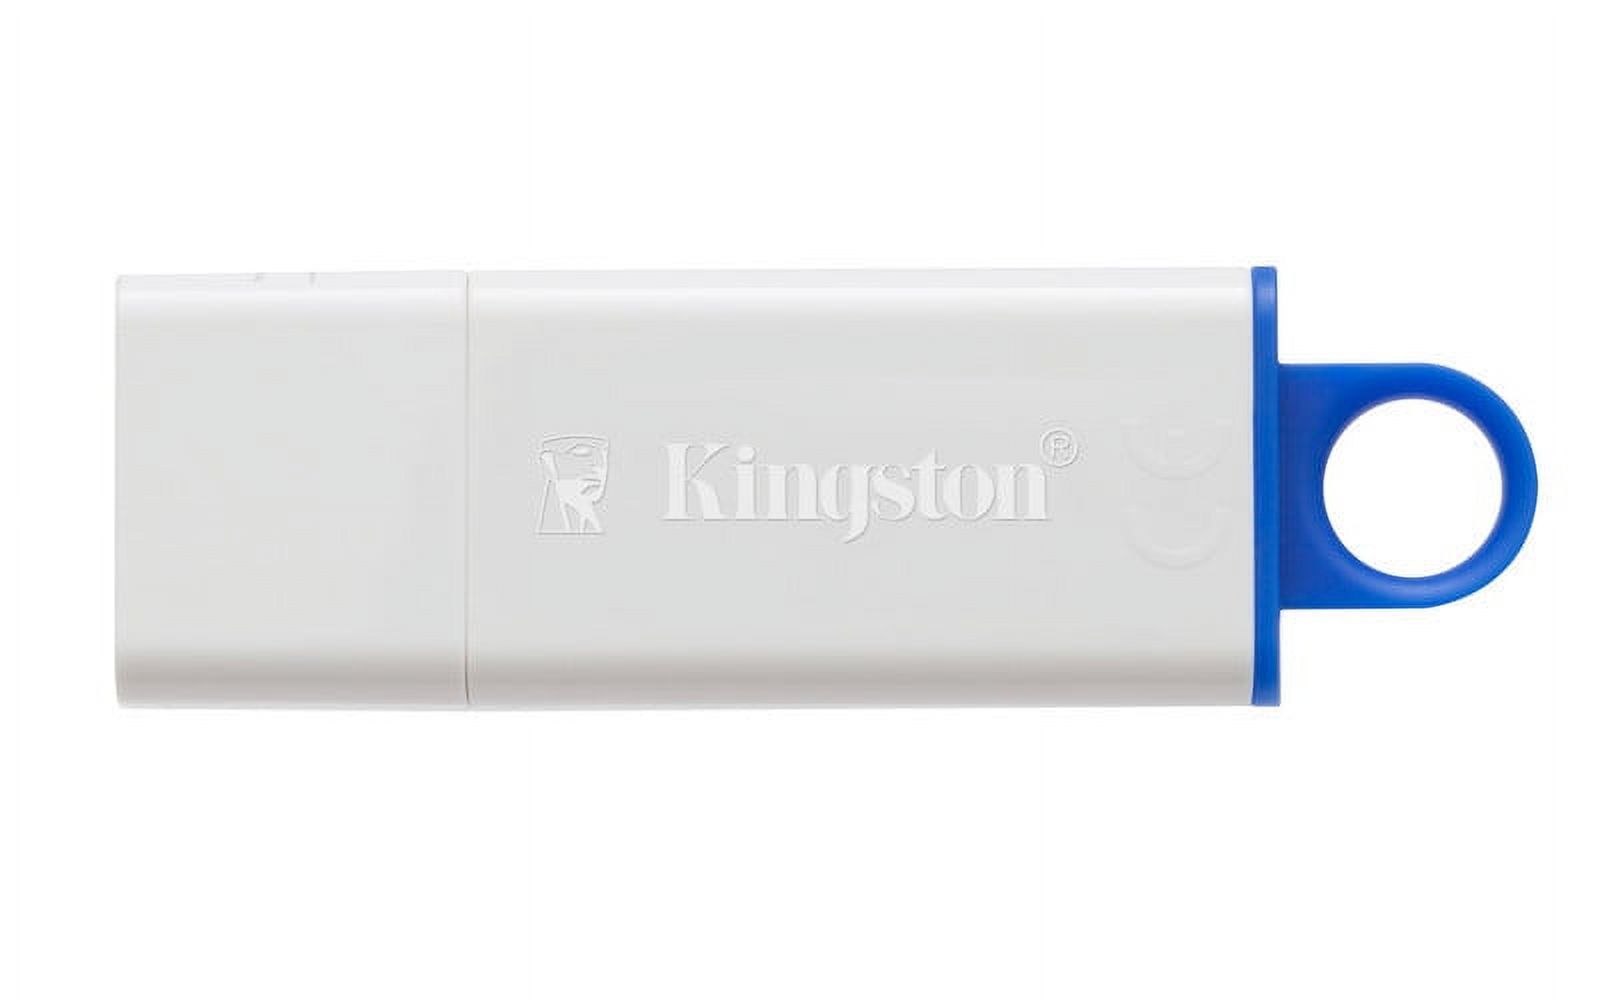 Kingston DataTraveler G4 16GB USB 3.0 Flash Drive Blue - image 5 of 5